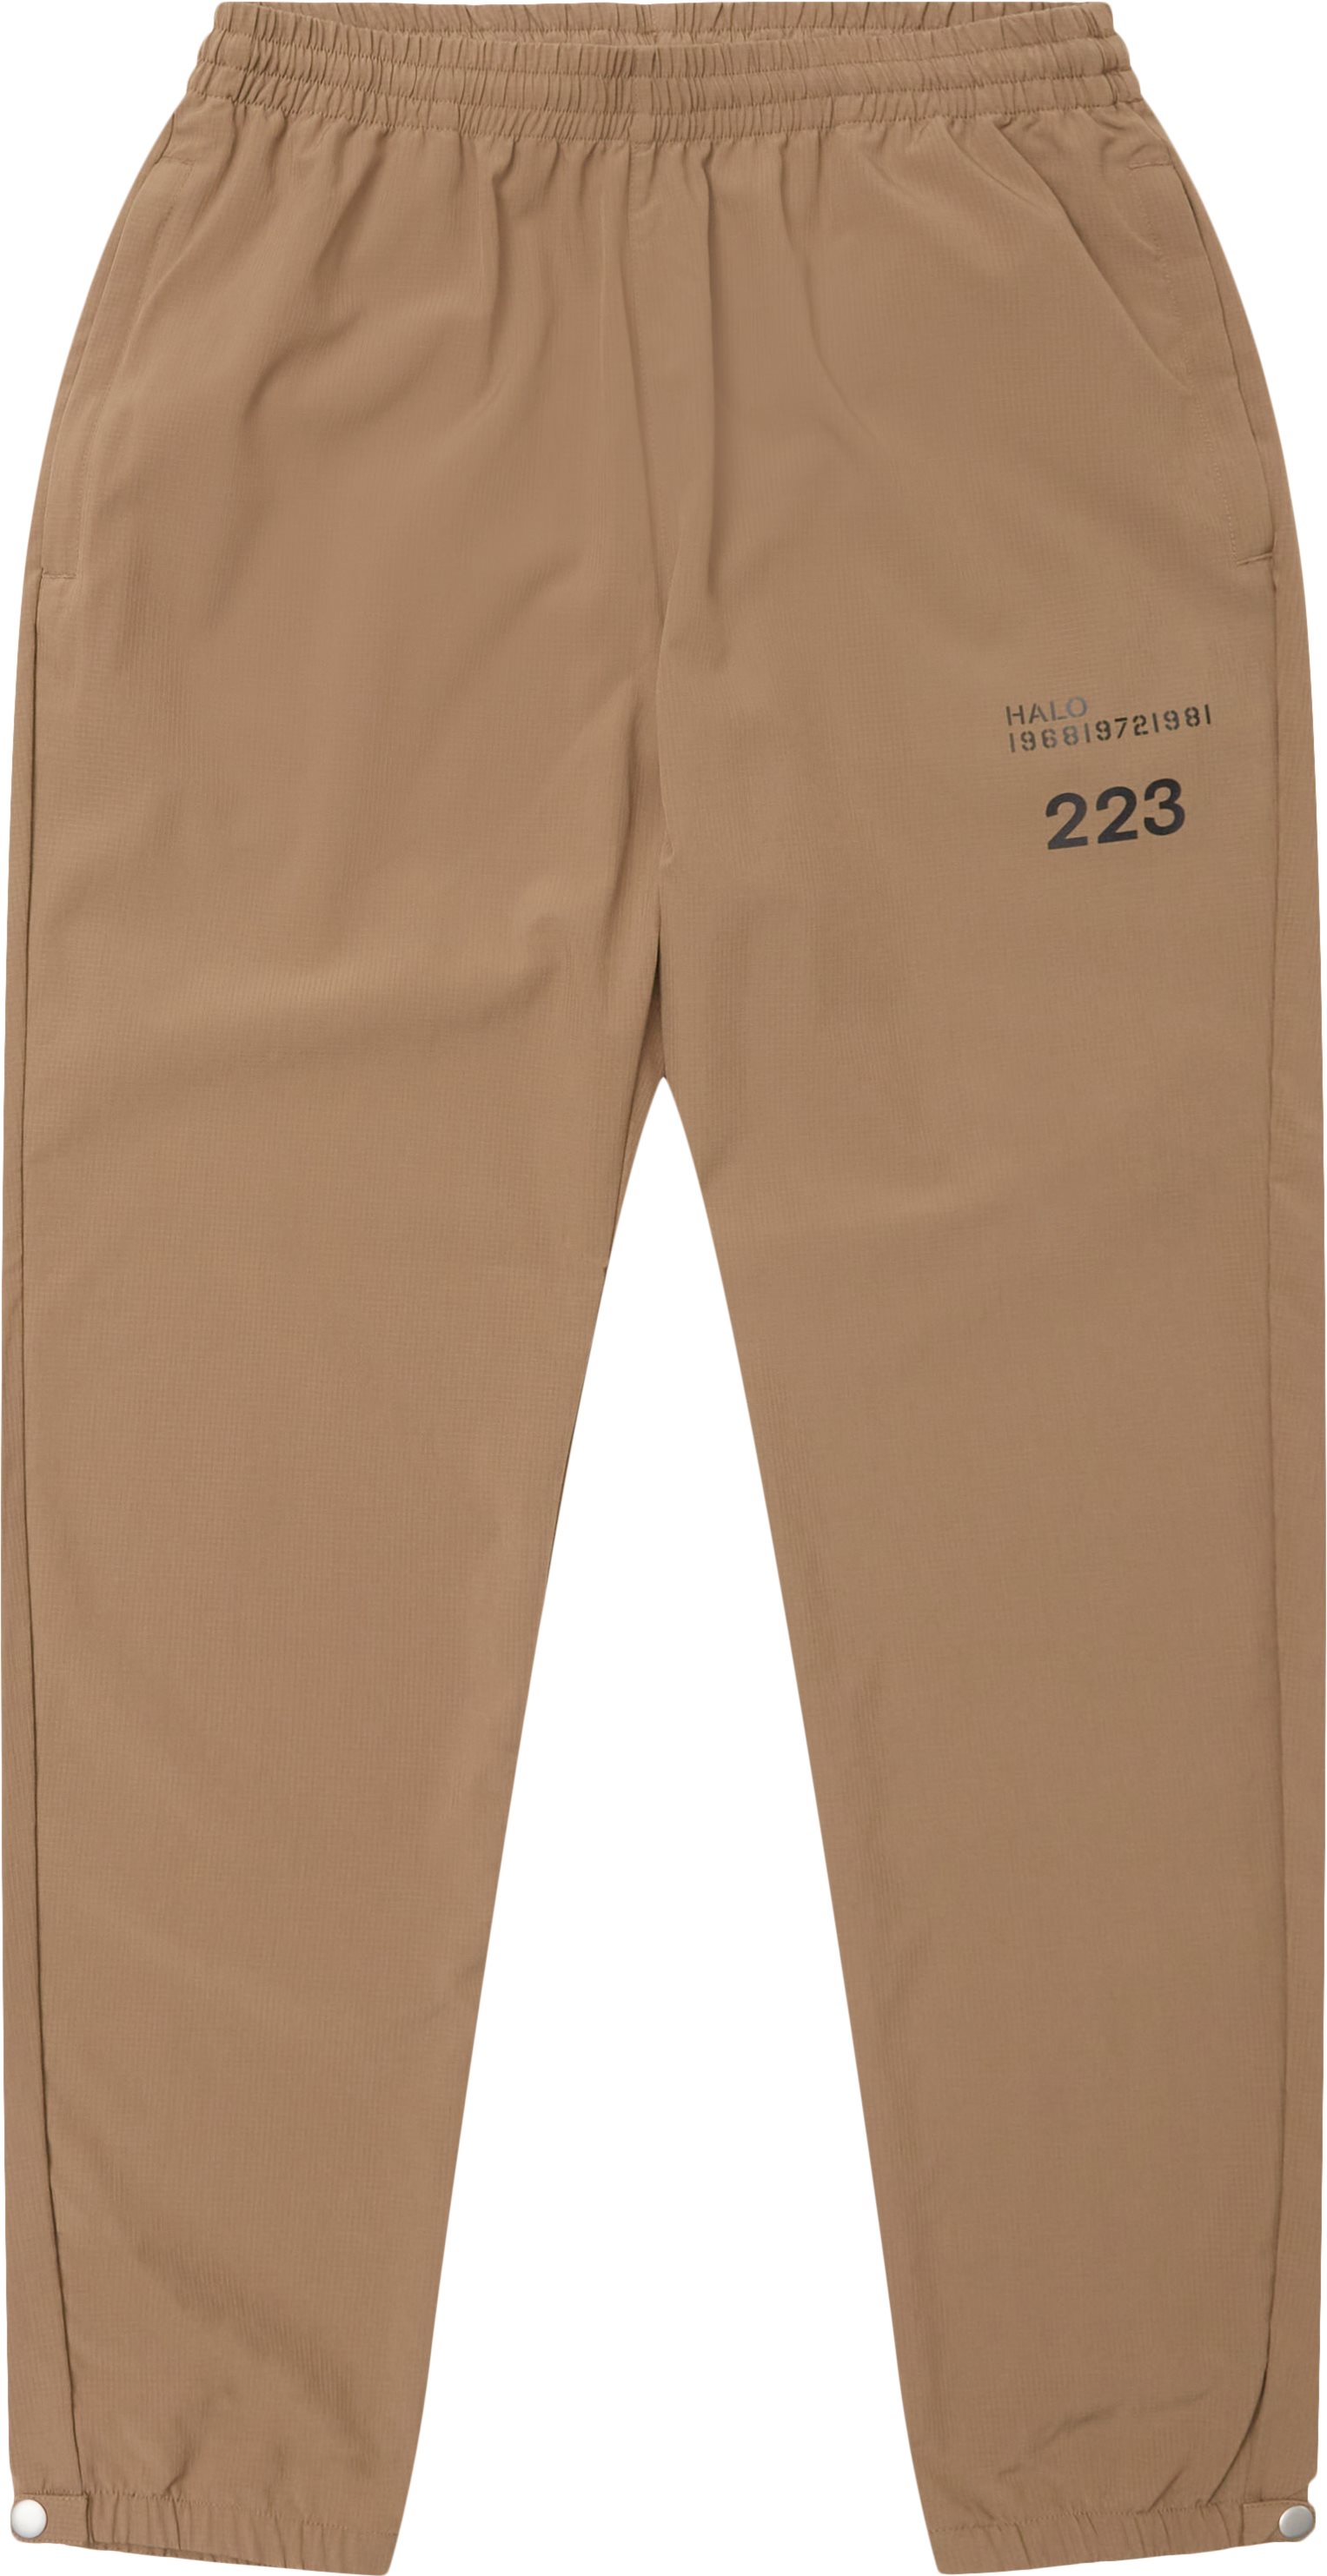 Tech Pant - Trousers - Regular fit - Sand